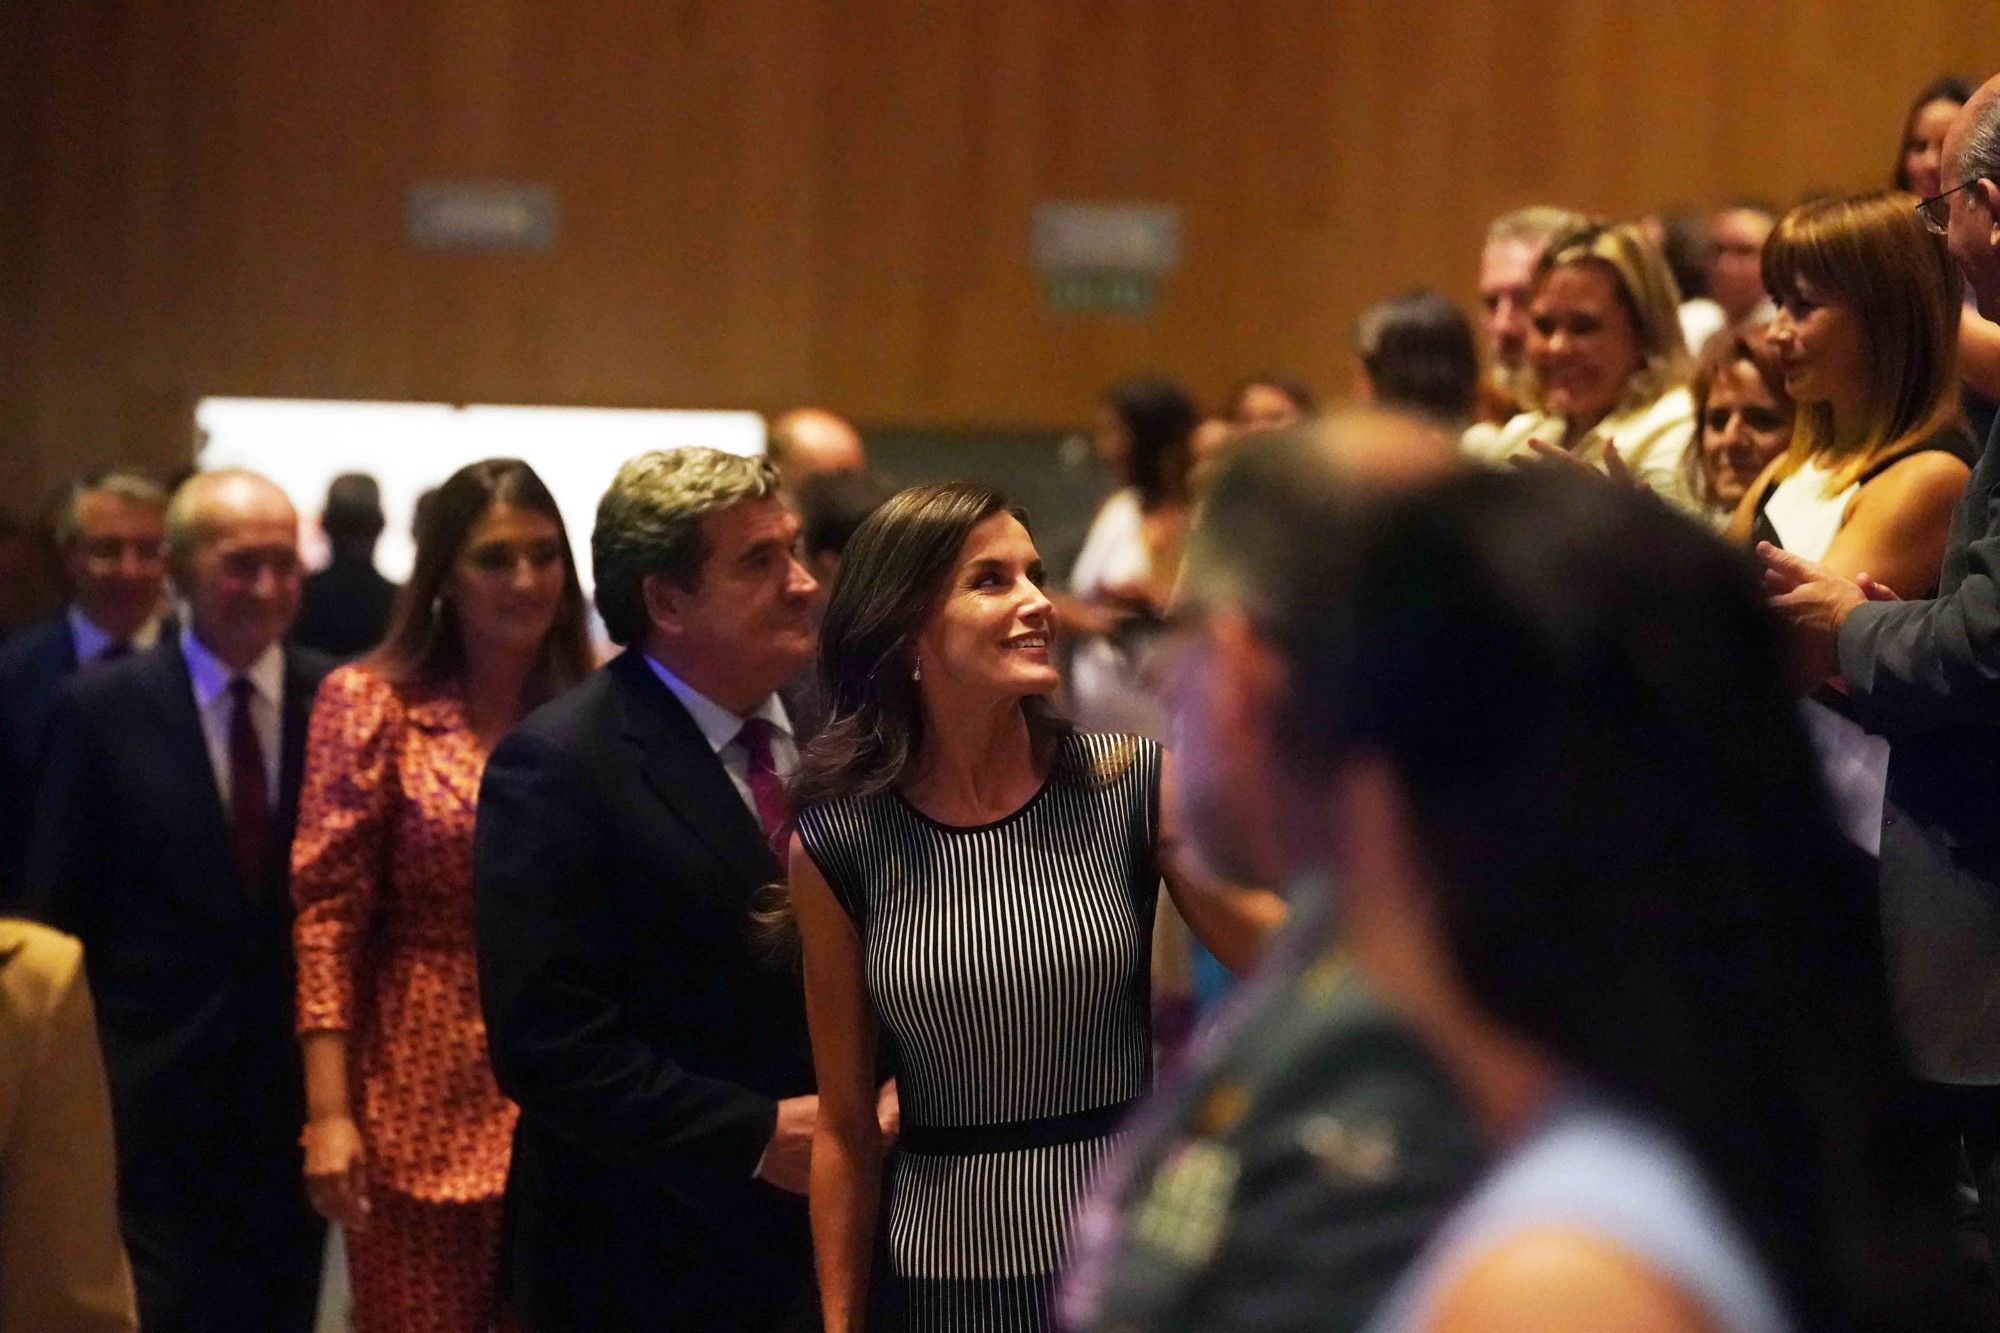 Doña Letizia preside en Málaga el II Congreso de Trata de Seres Humanos